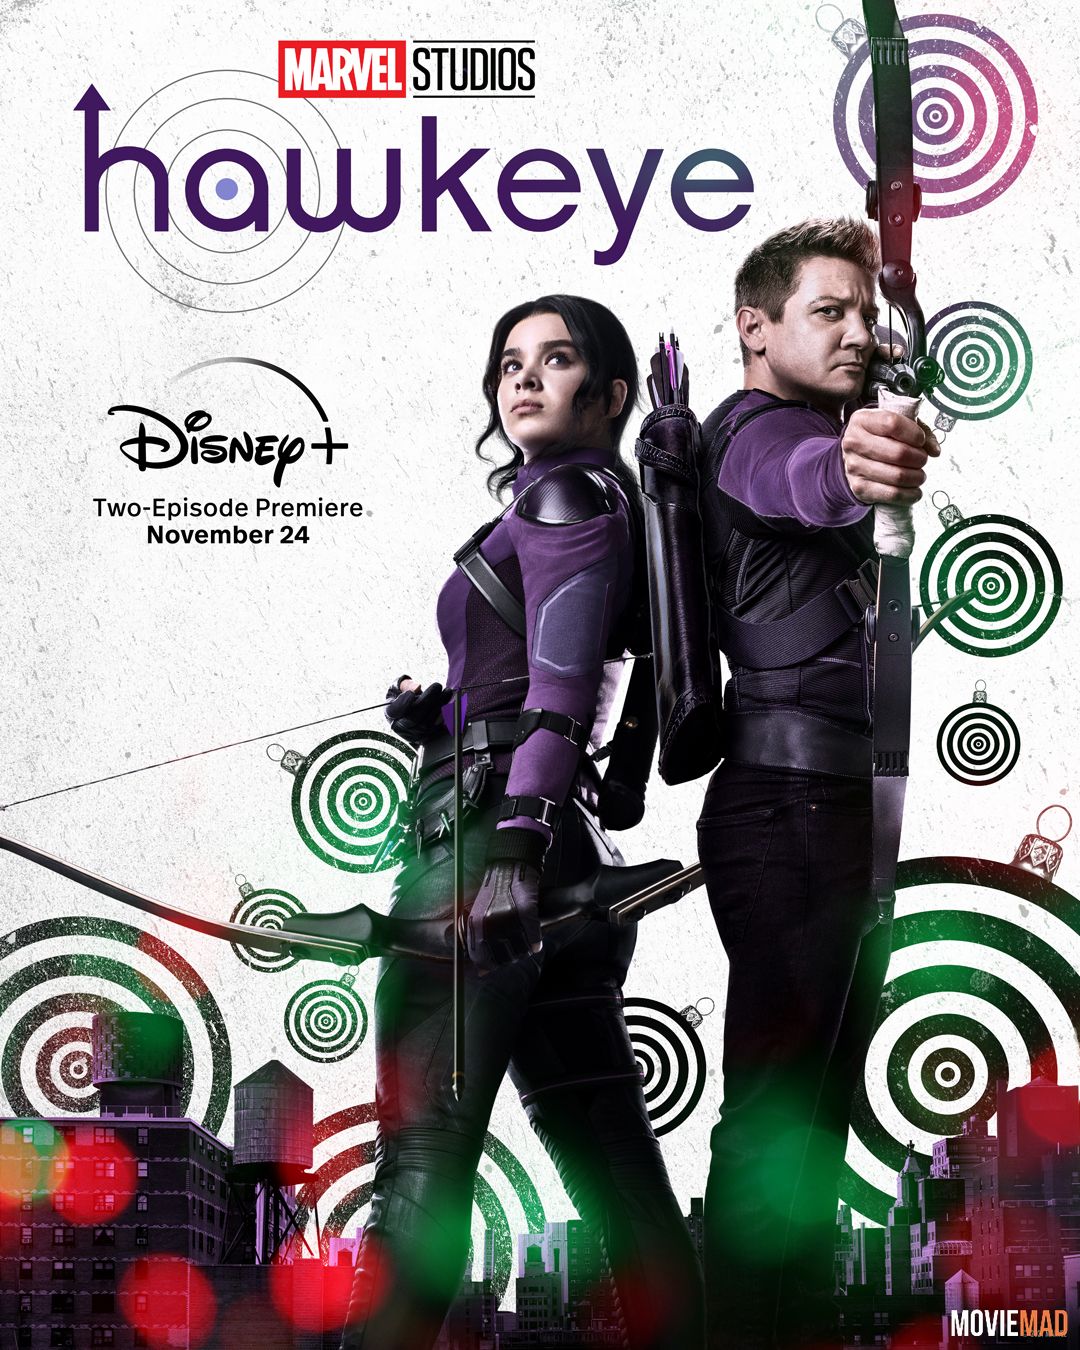 Hawkeye S01E01 (2021) Hindi Dubbed Complete DSPN Series HDRip 720p 480p